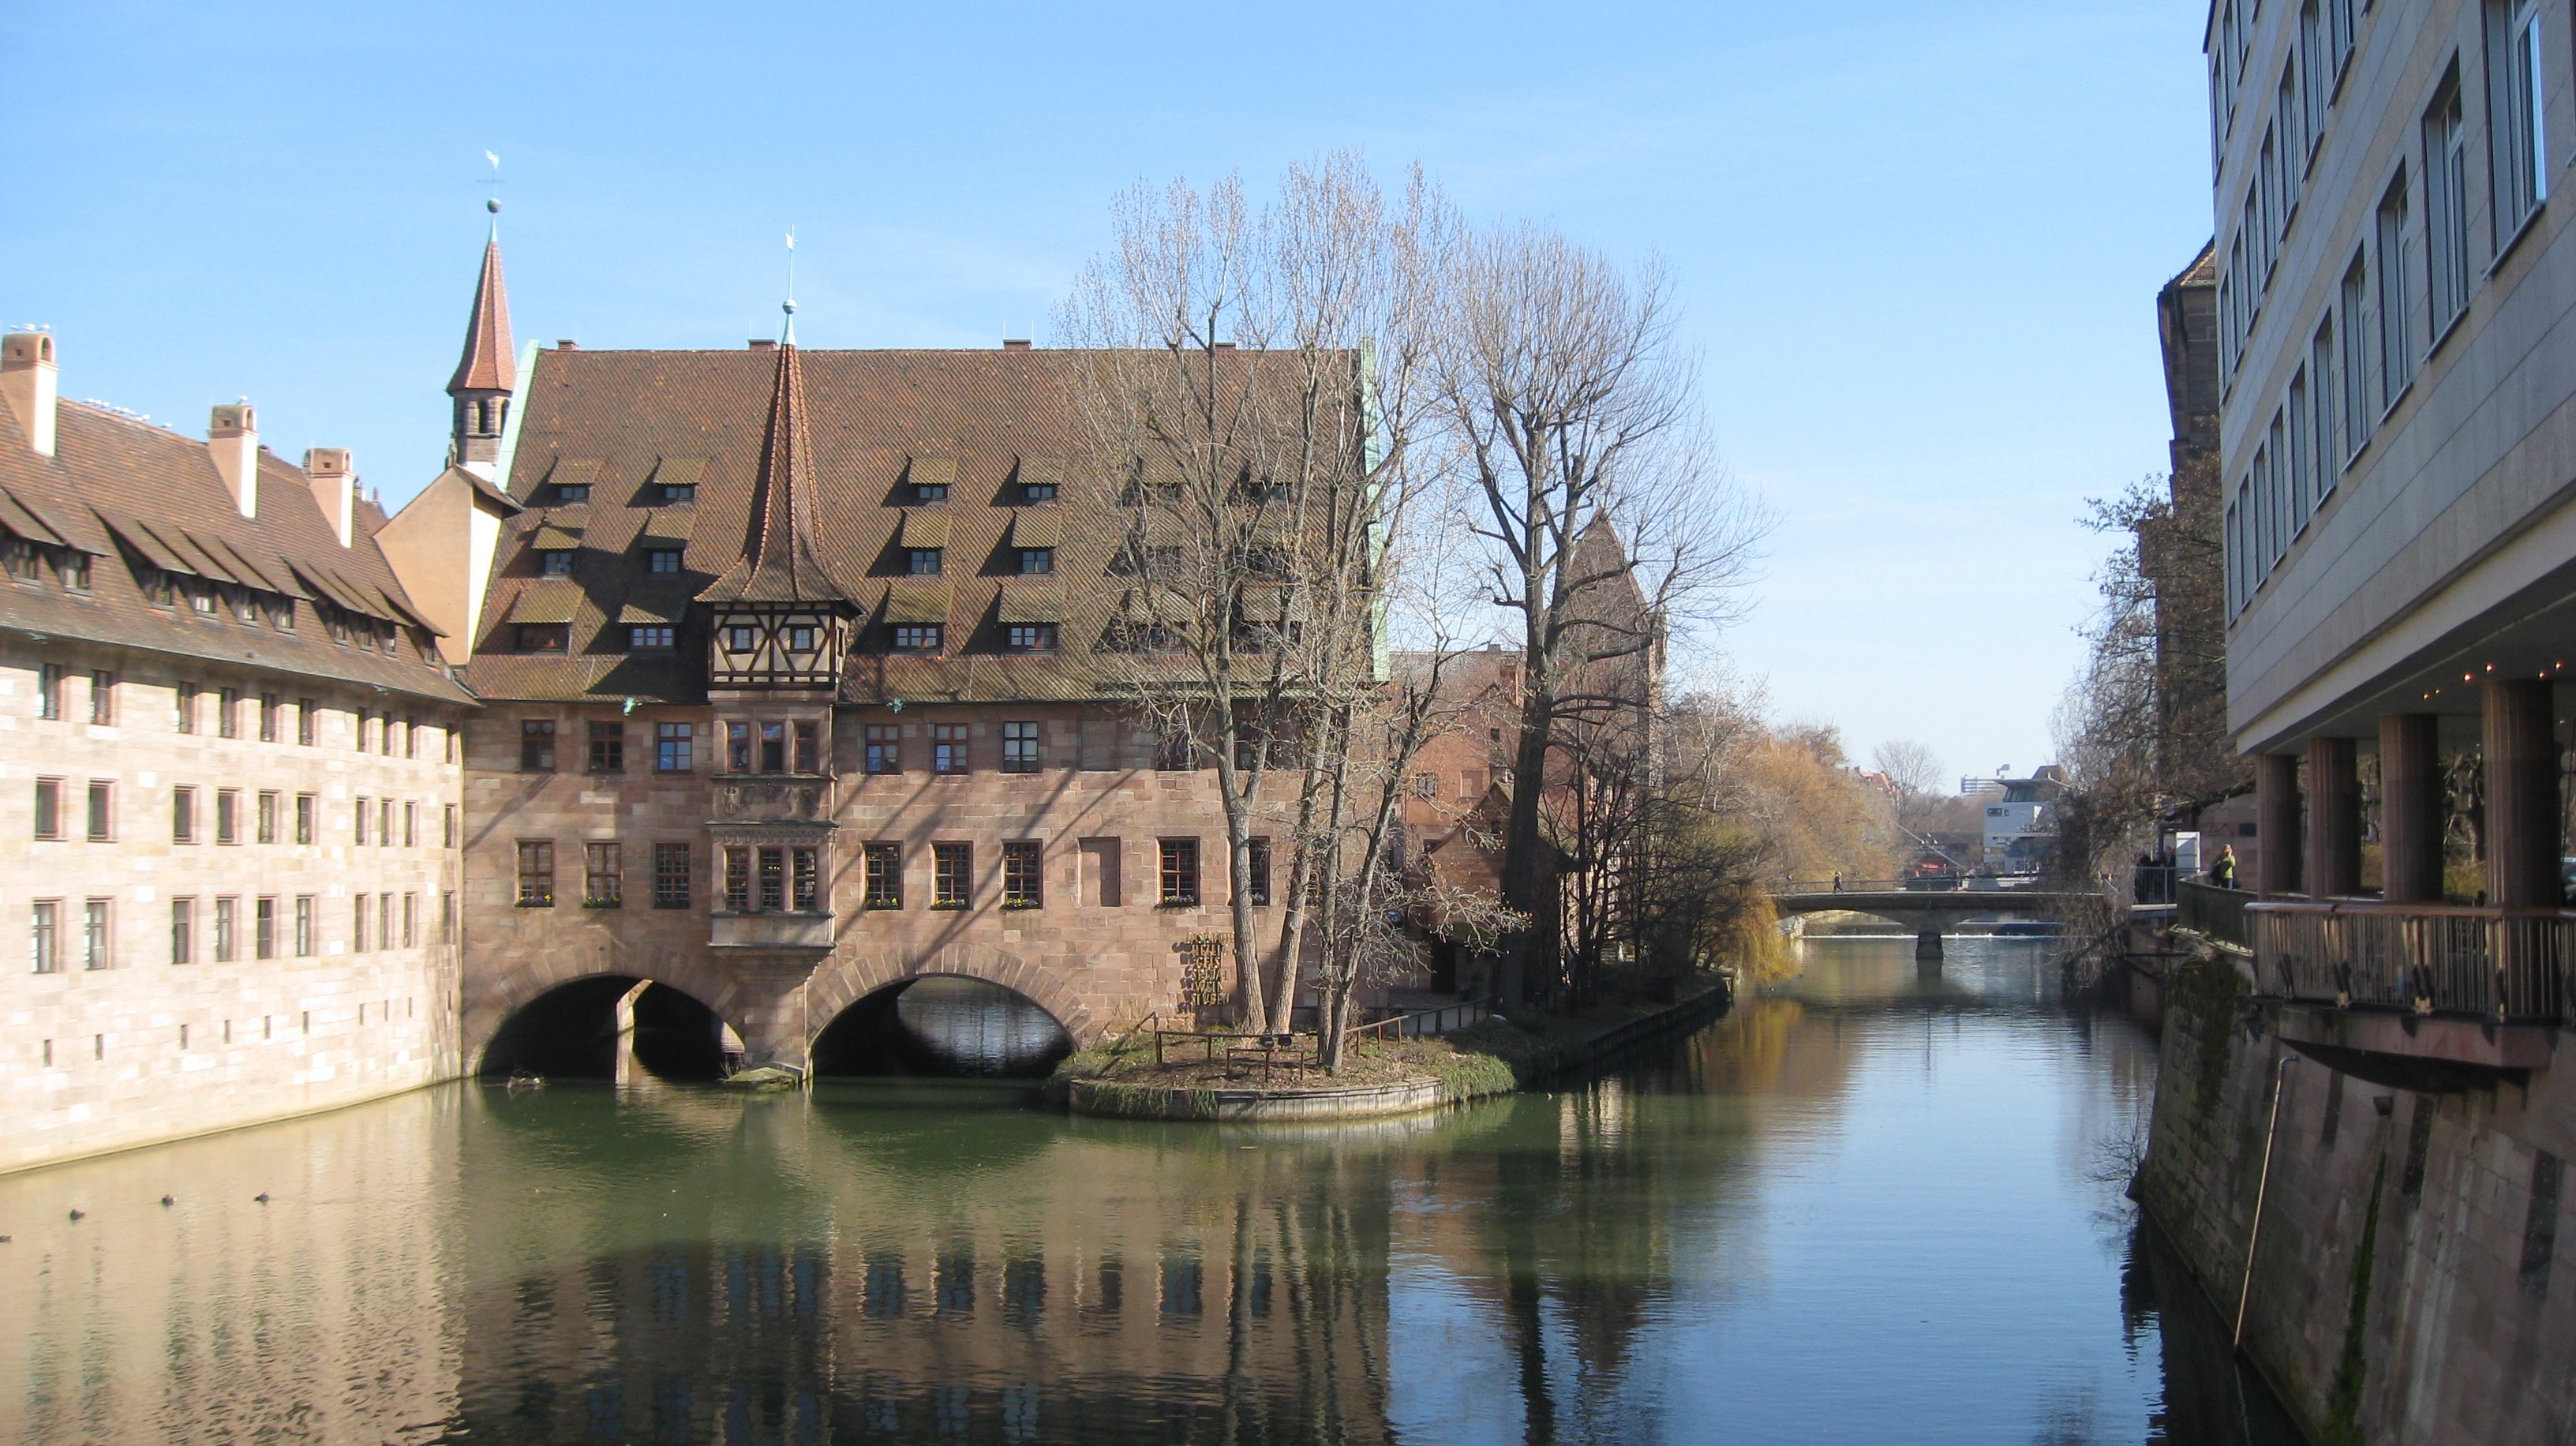 Friedrick Alexander University (FAU) in Erlangen-Nuremberg, Germany